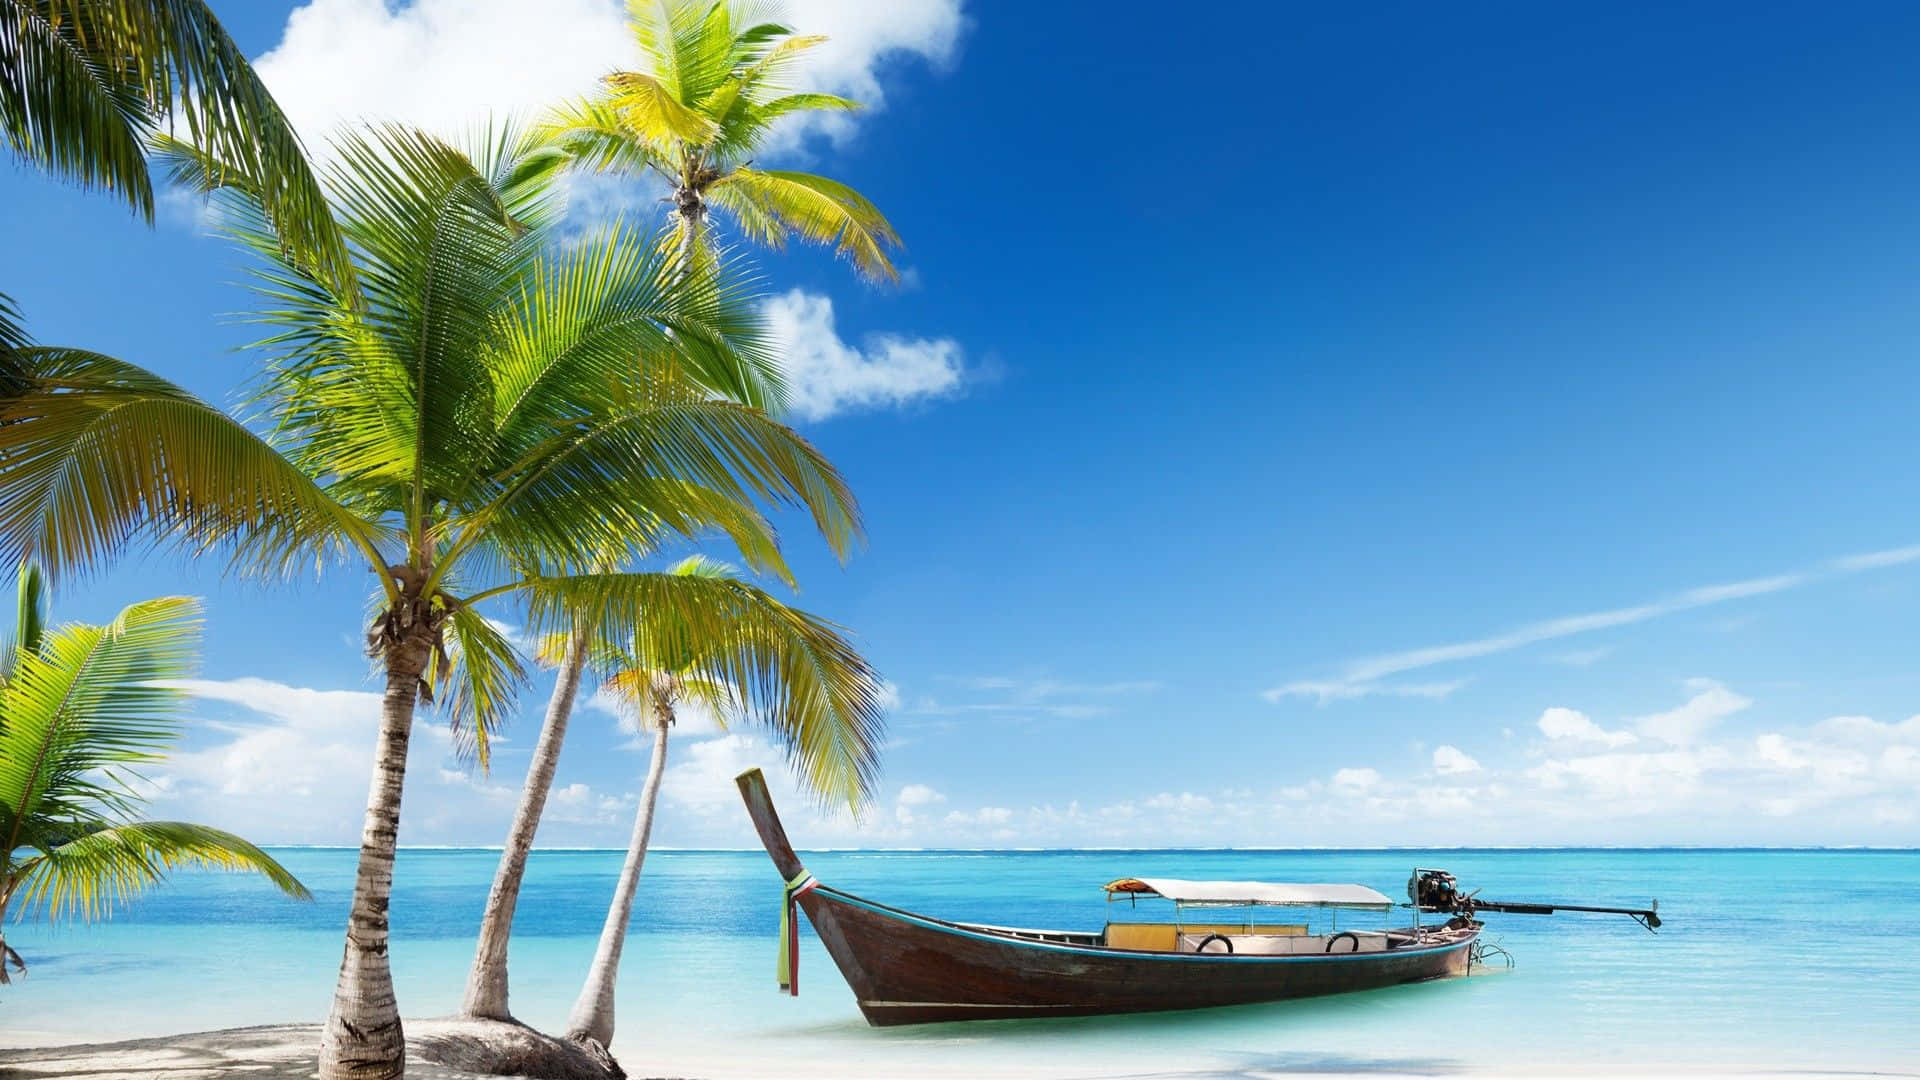 Beautiful Sea Palm Tree & Boat